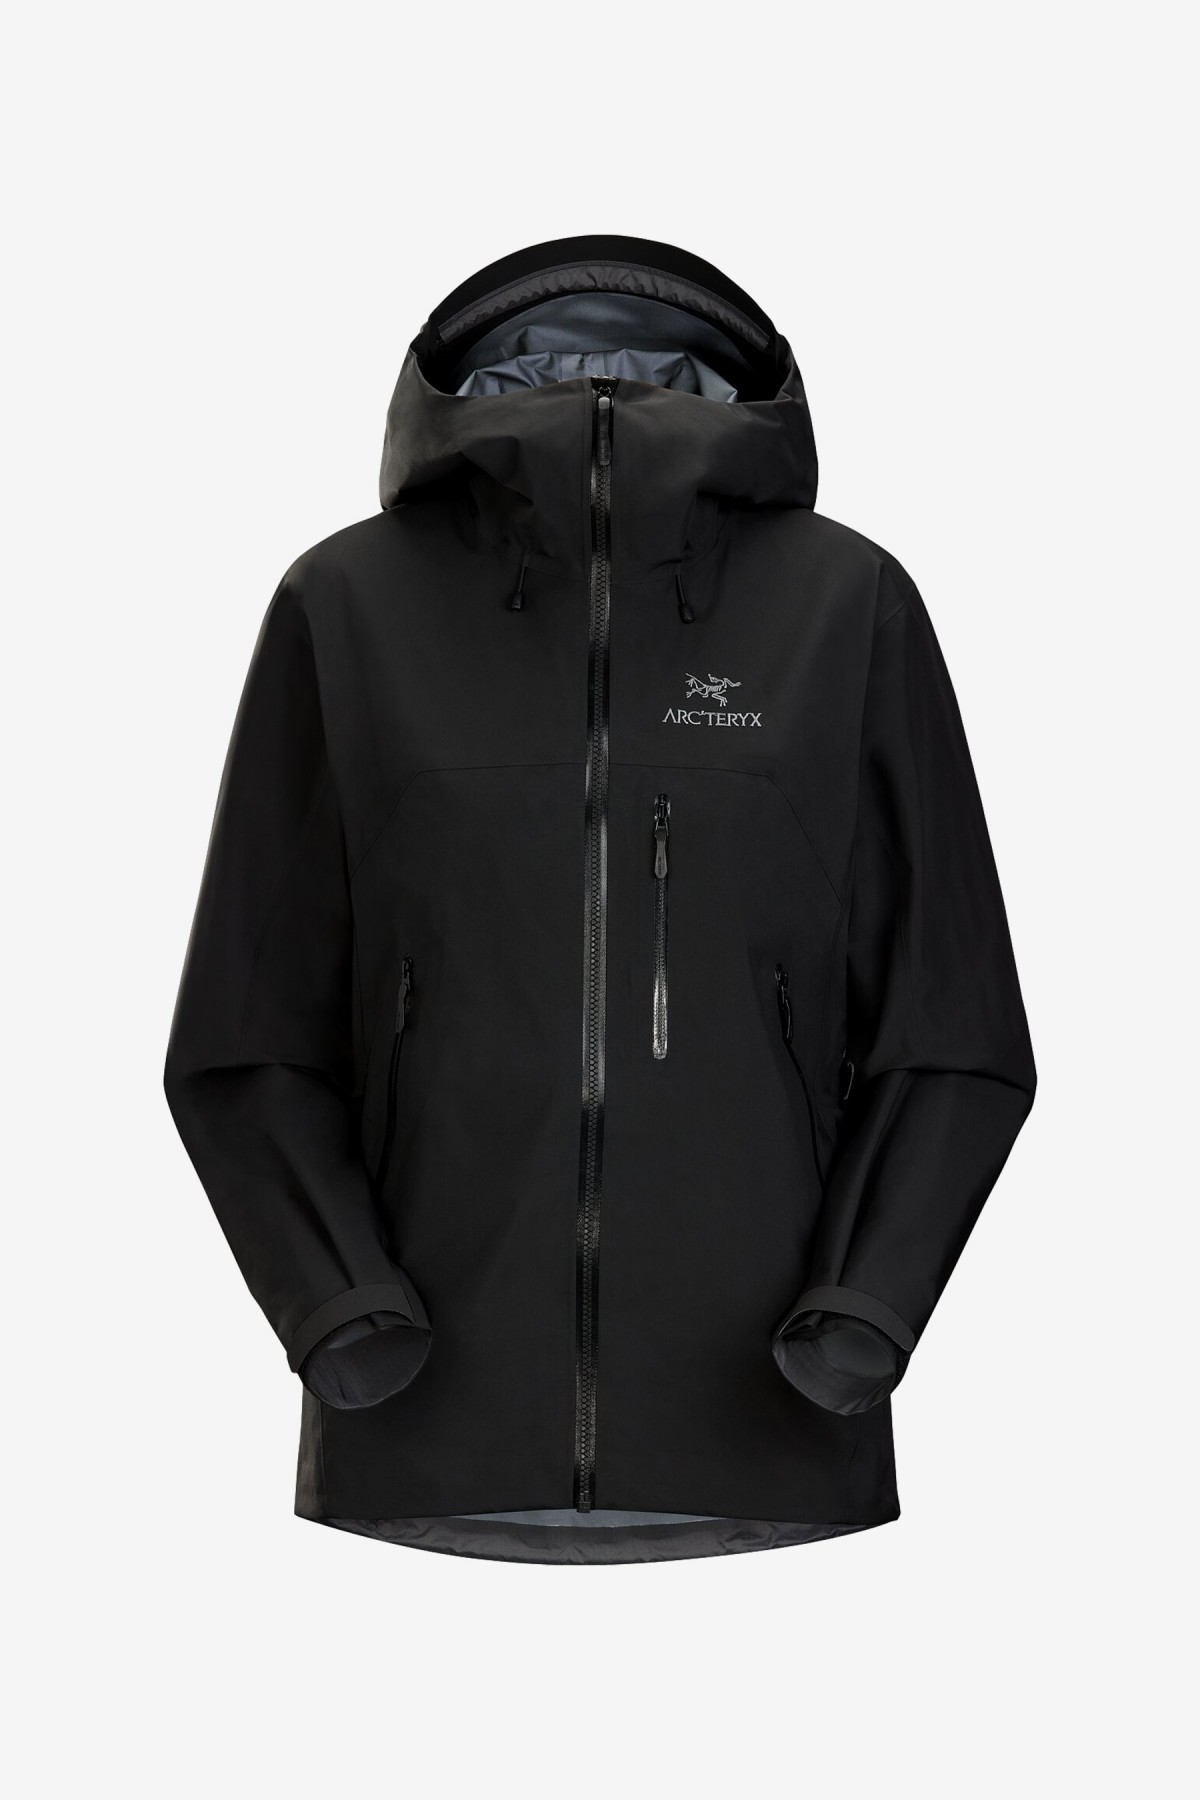 Arc'teryx Beta SV Jacket in Black